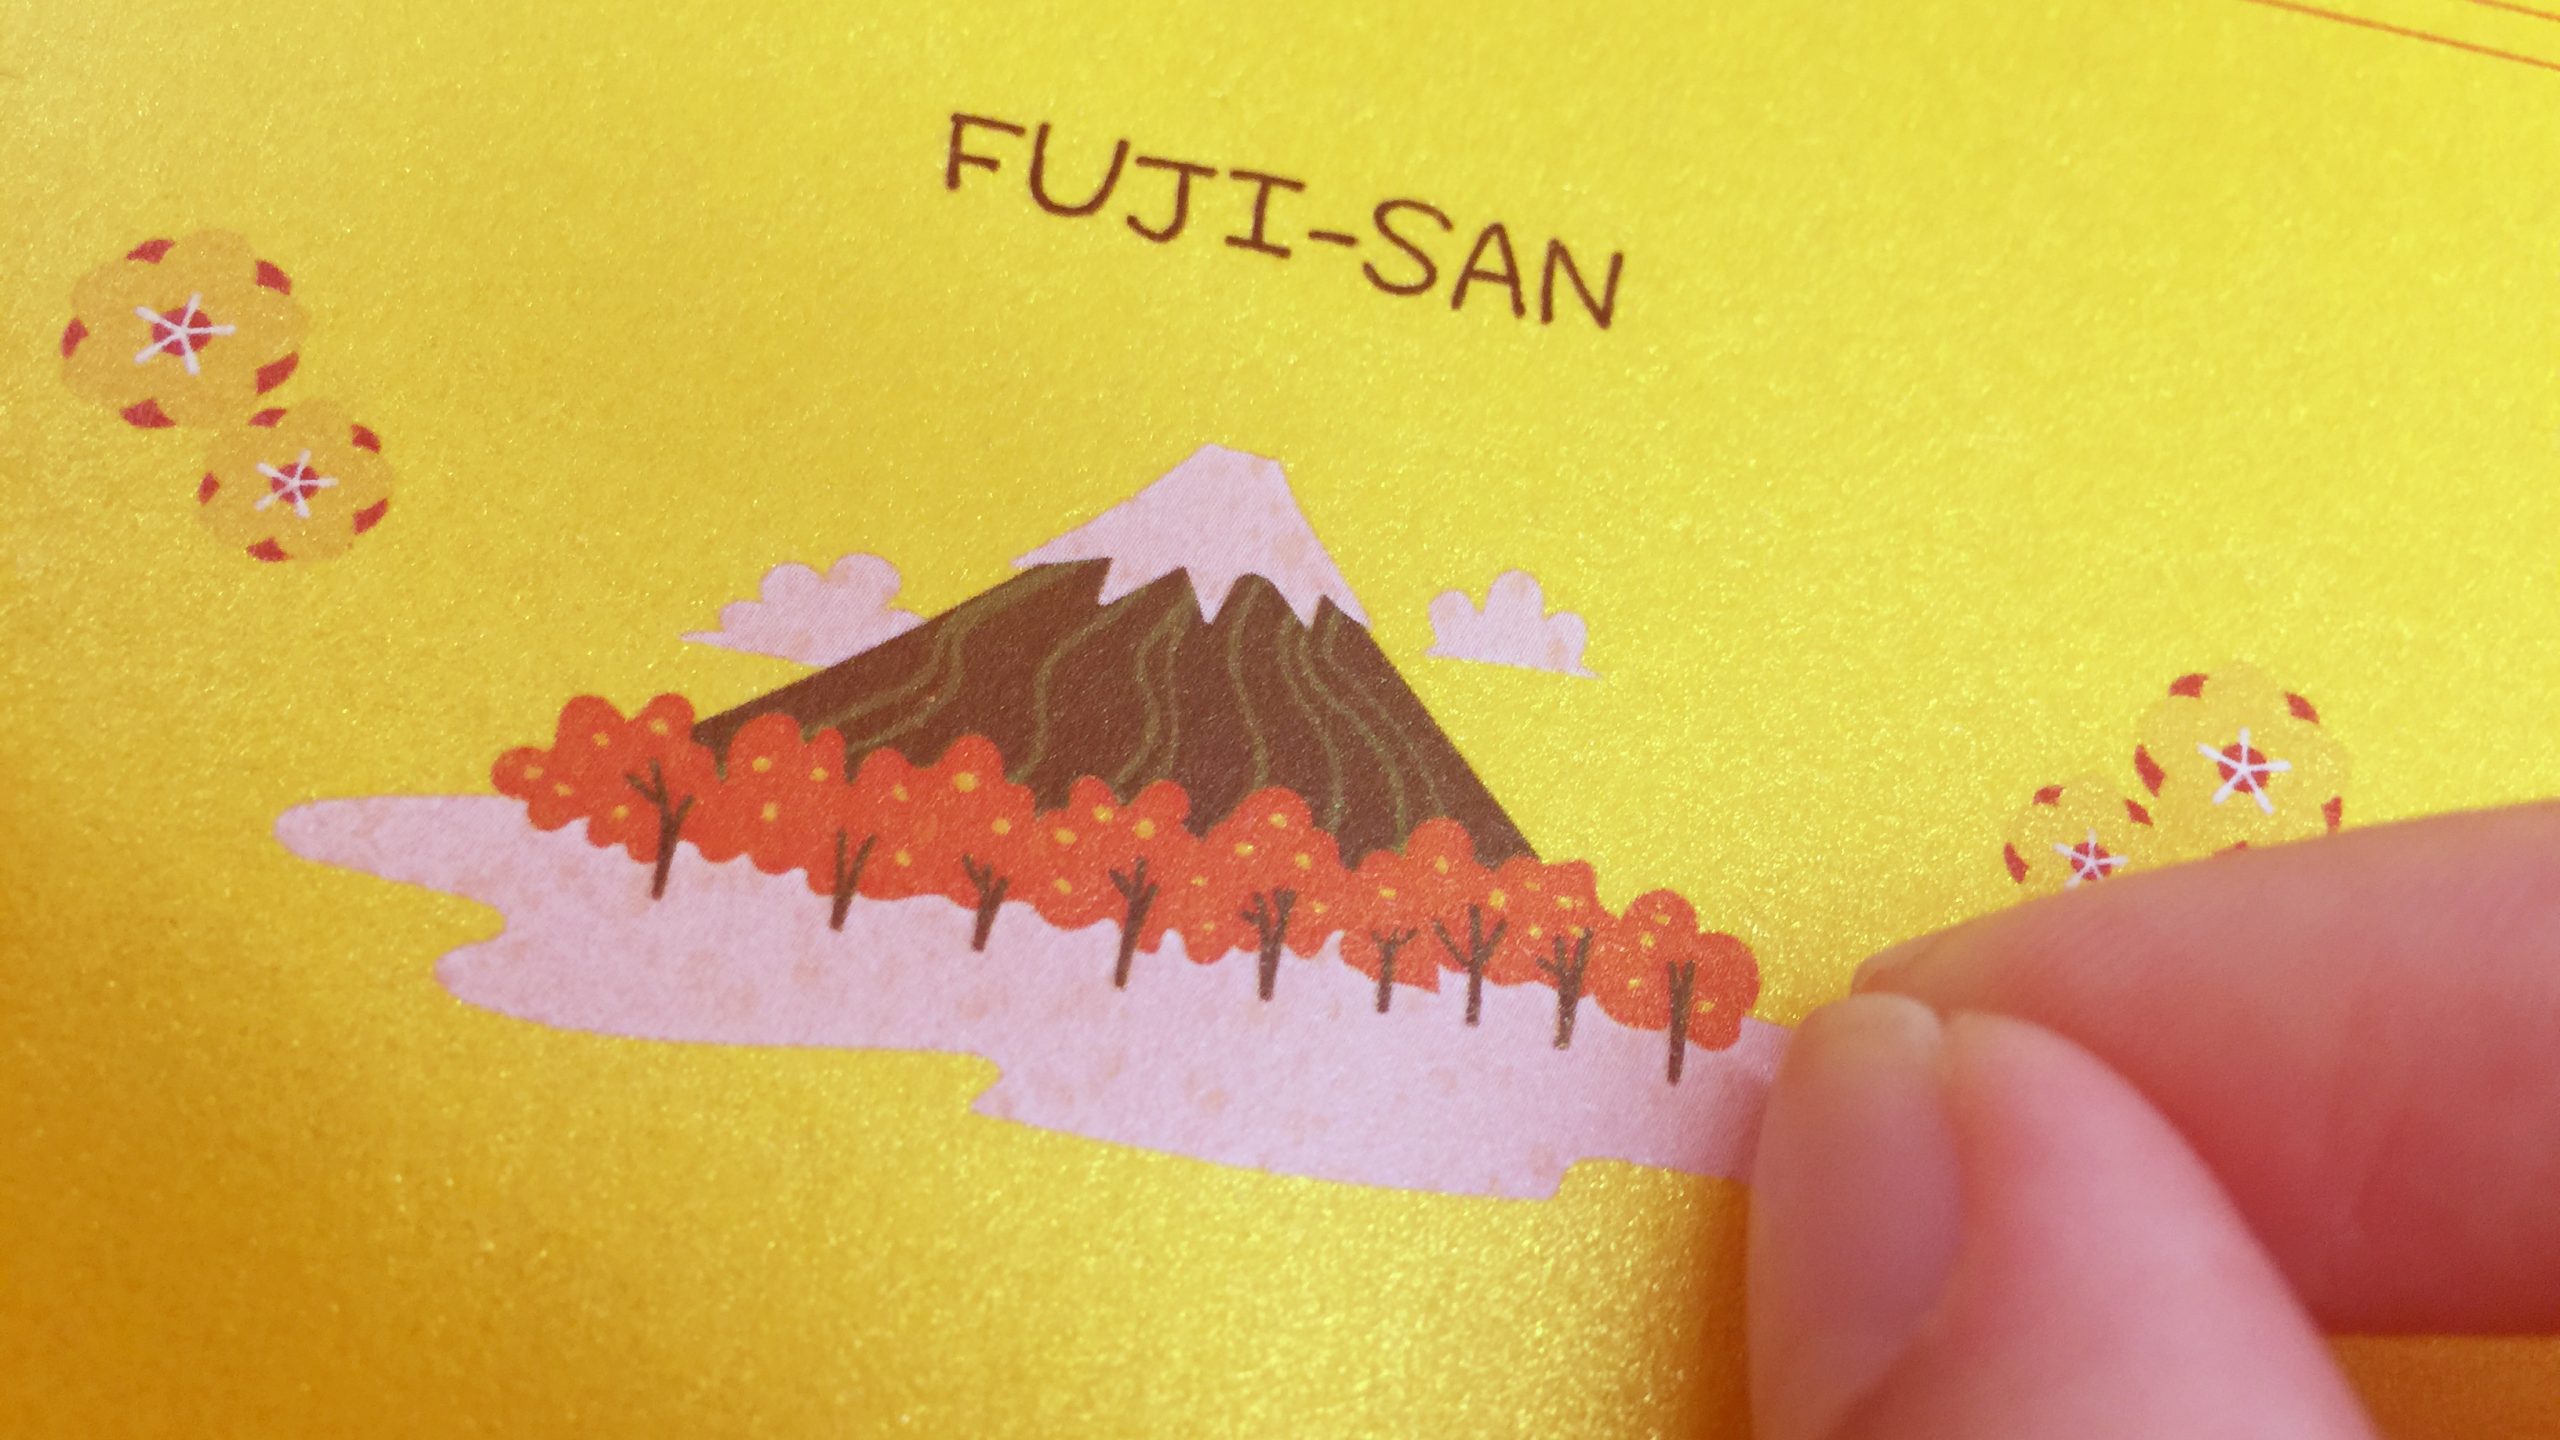 Sand Gold Paper Sticker Material, White Underlay Printing, Fuji-San, Uncut Sticker Sheets